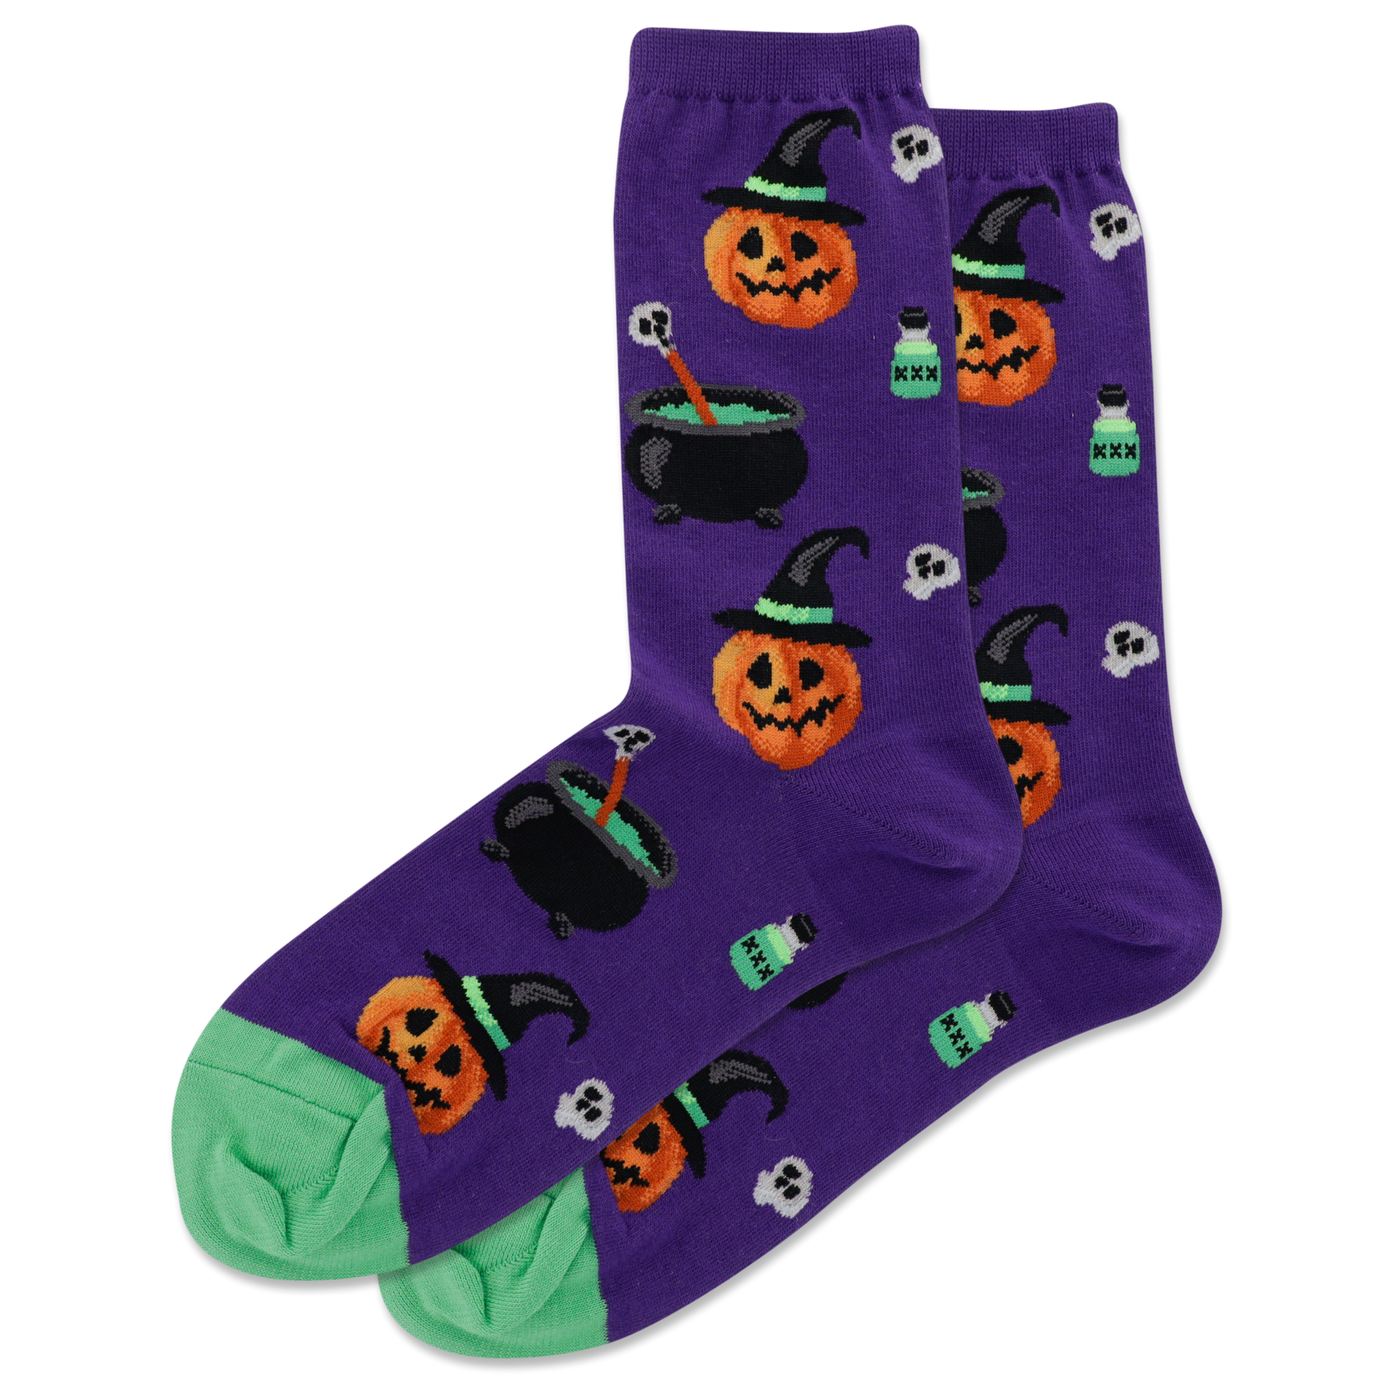 "Witch Pumpkin" Cotton Crew Socks by Hot Sox - Medium